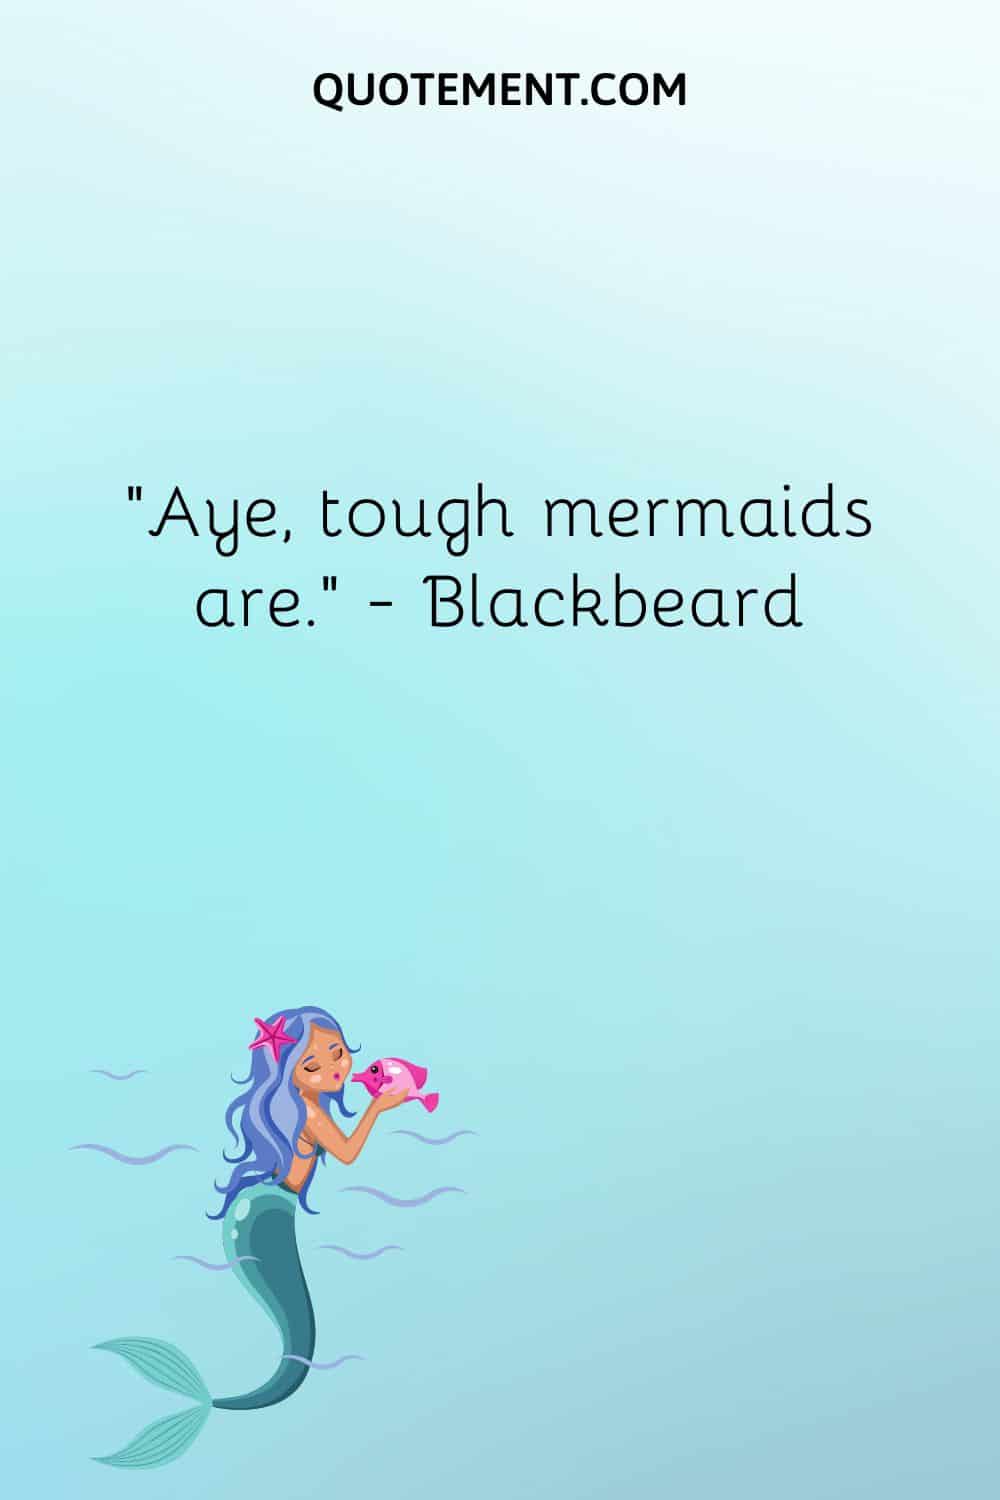 “Aye, tough mermaids are.” — Blackbeard